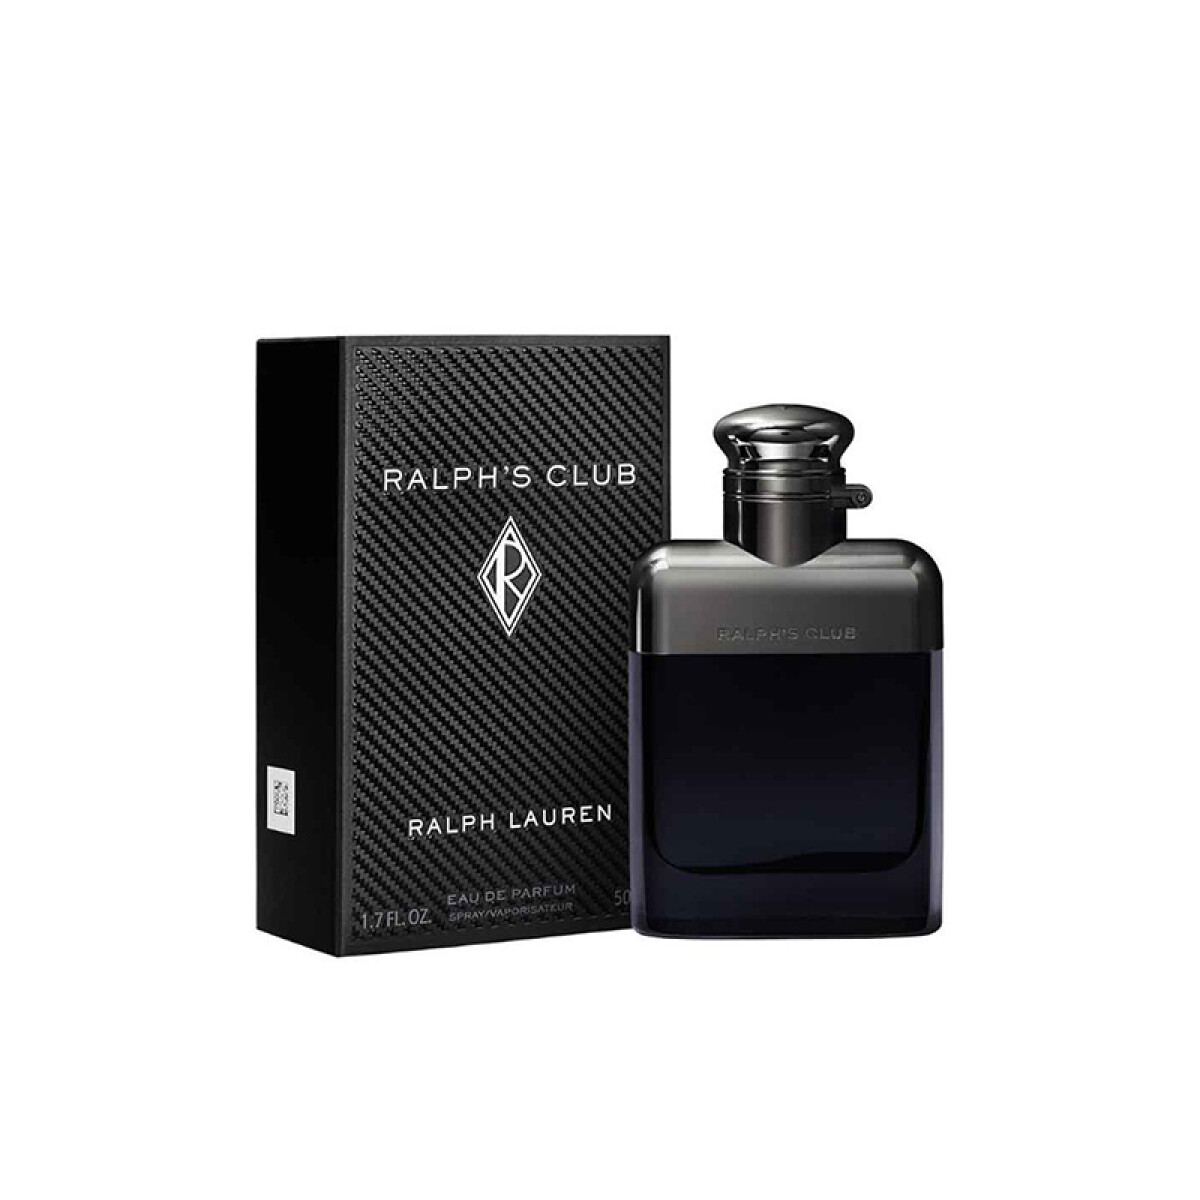 Ralph Lauren Ralph´s Club edp - 50 ml 